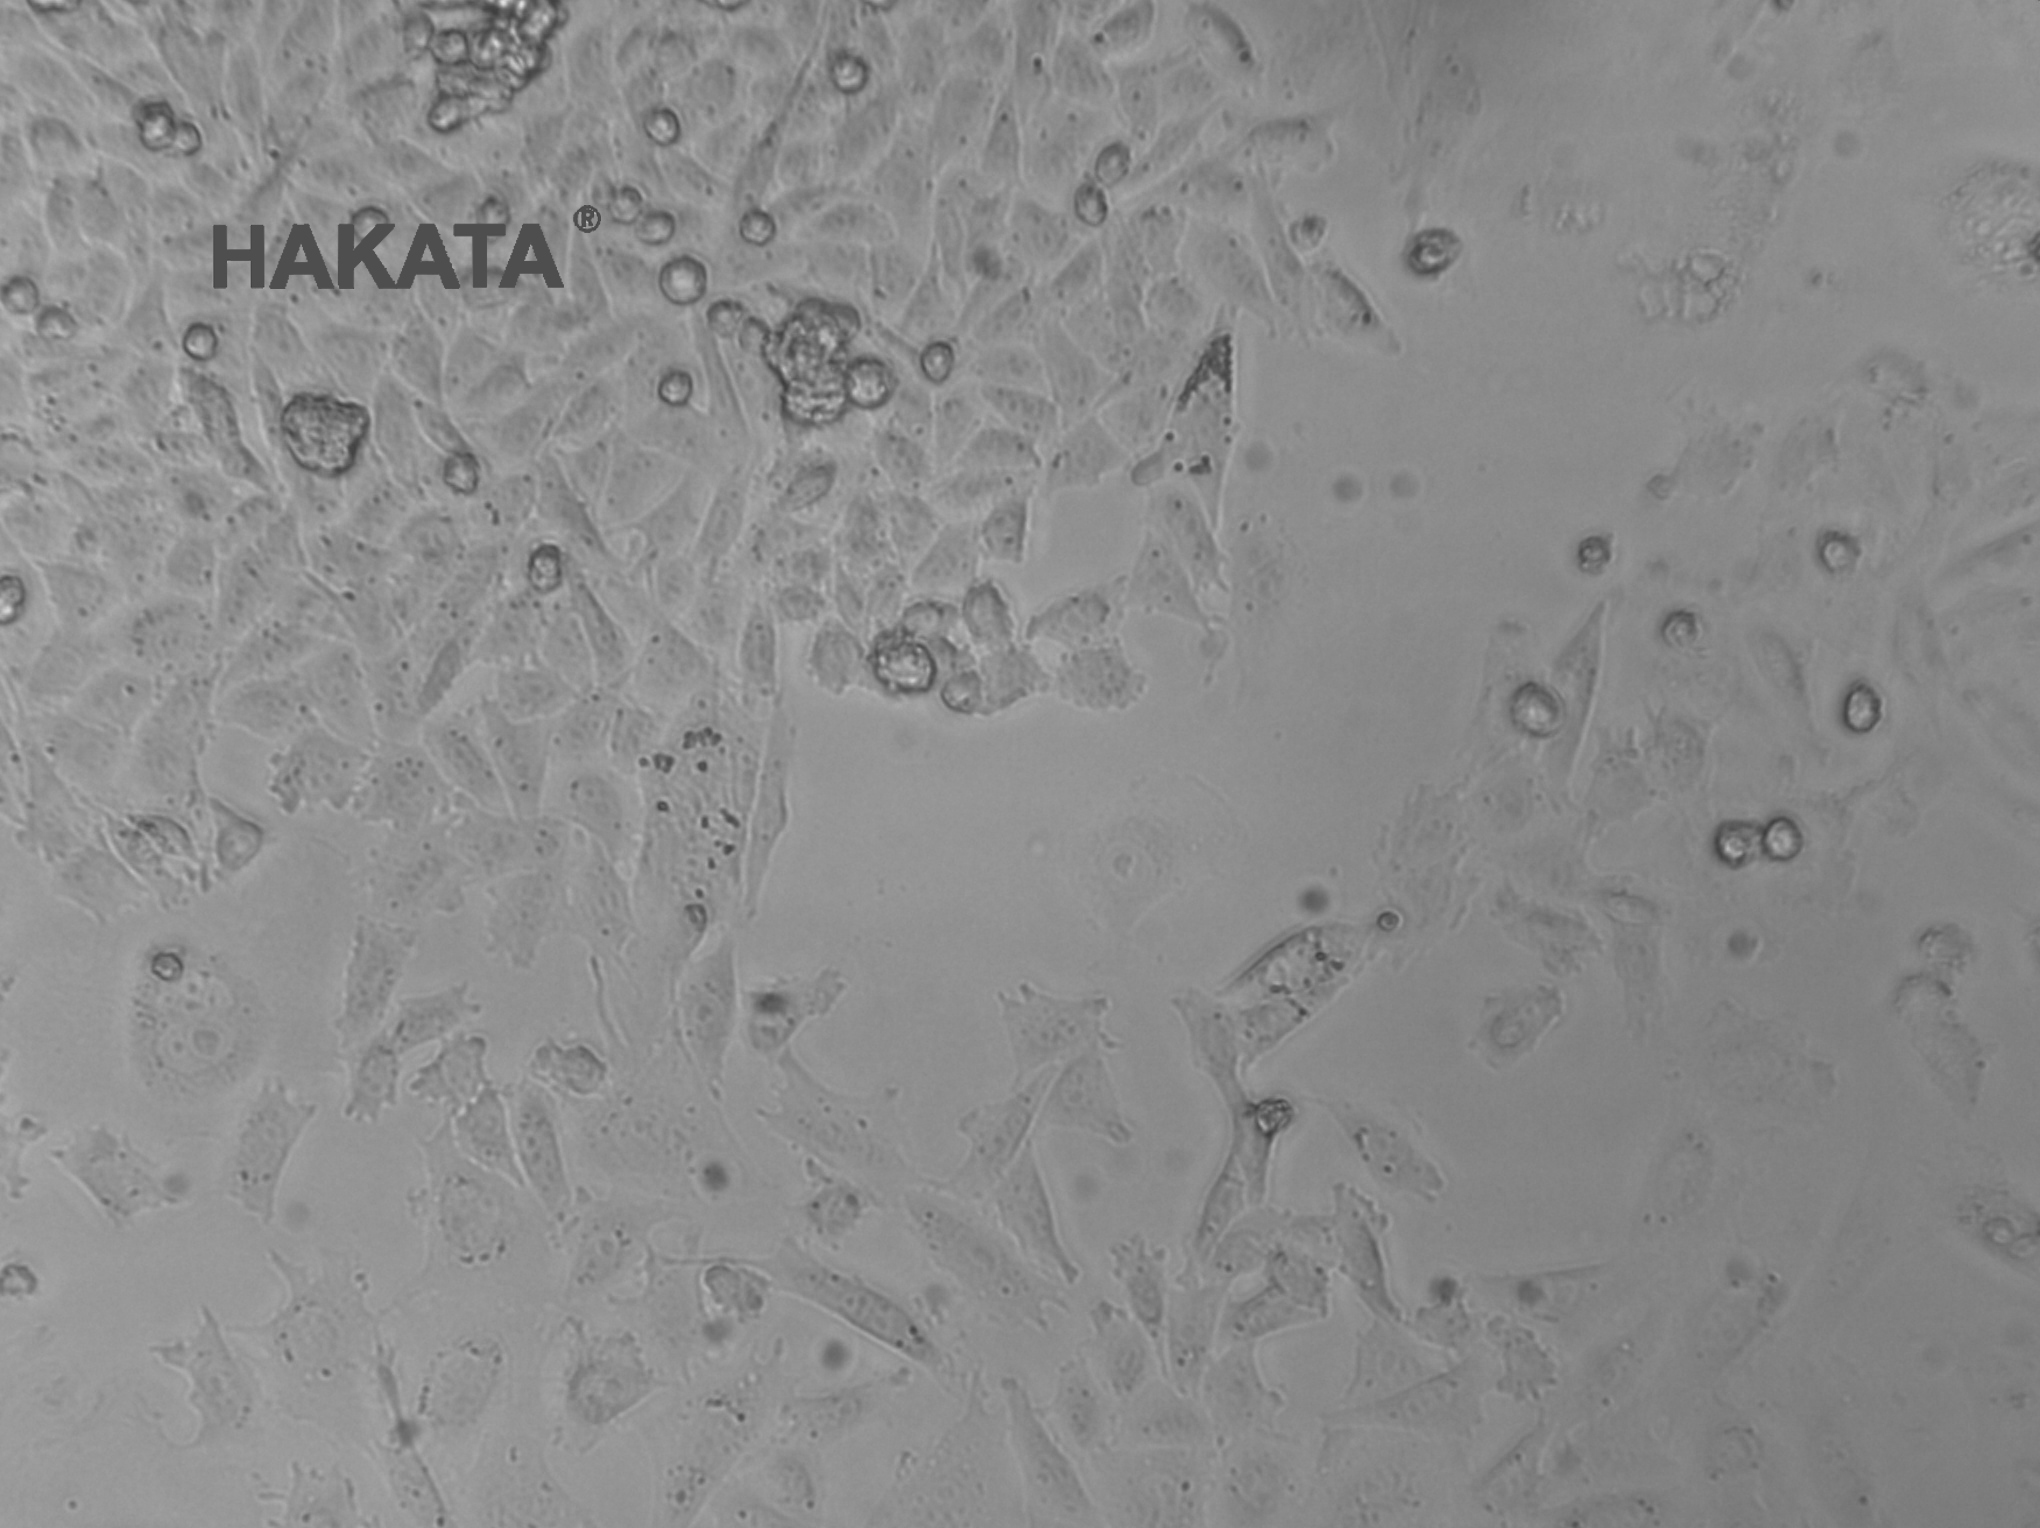 CHO-K1细胞